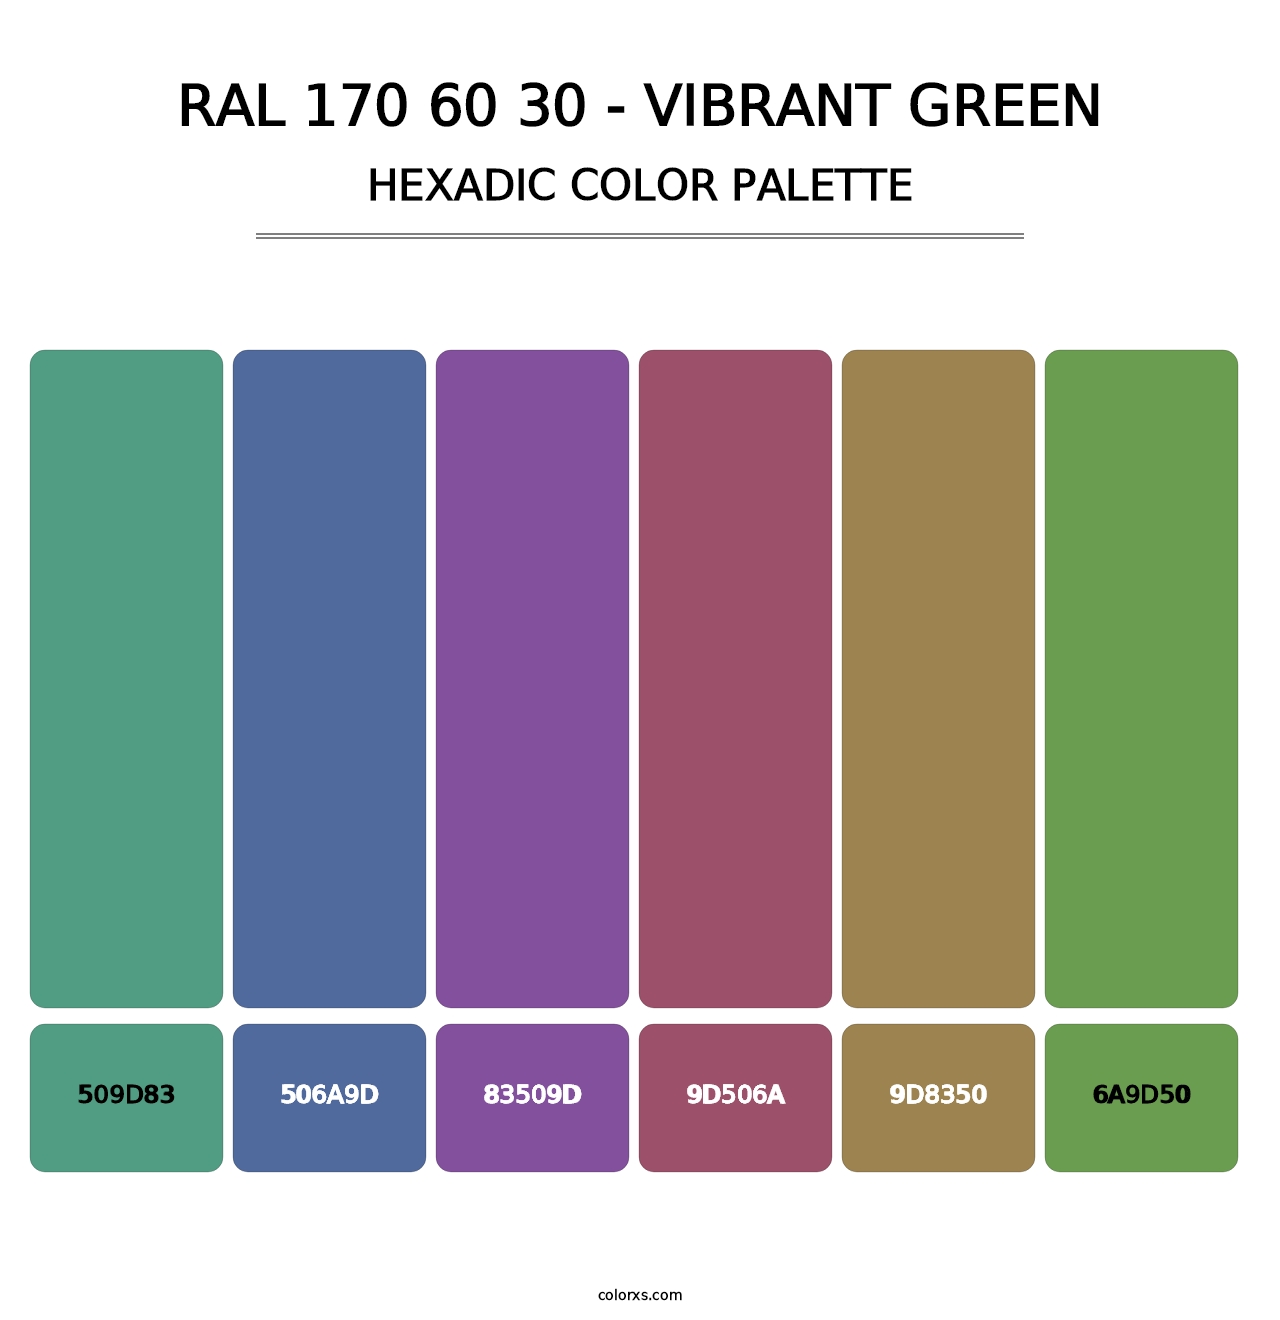 RAL 170 60 30 - Vibrant Green - Hexadic Color Palette